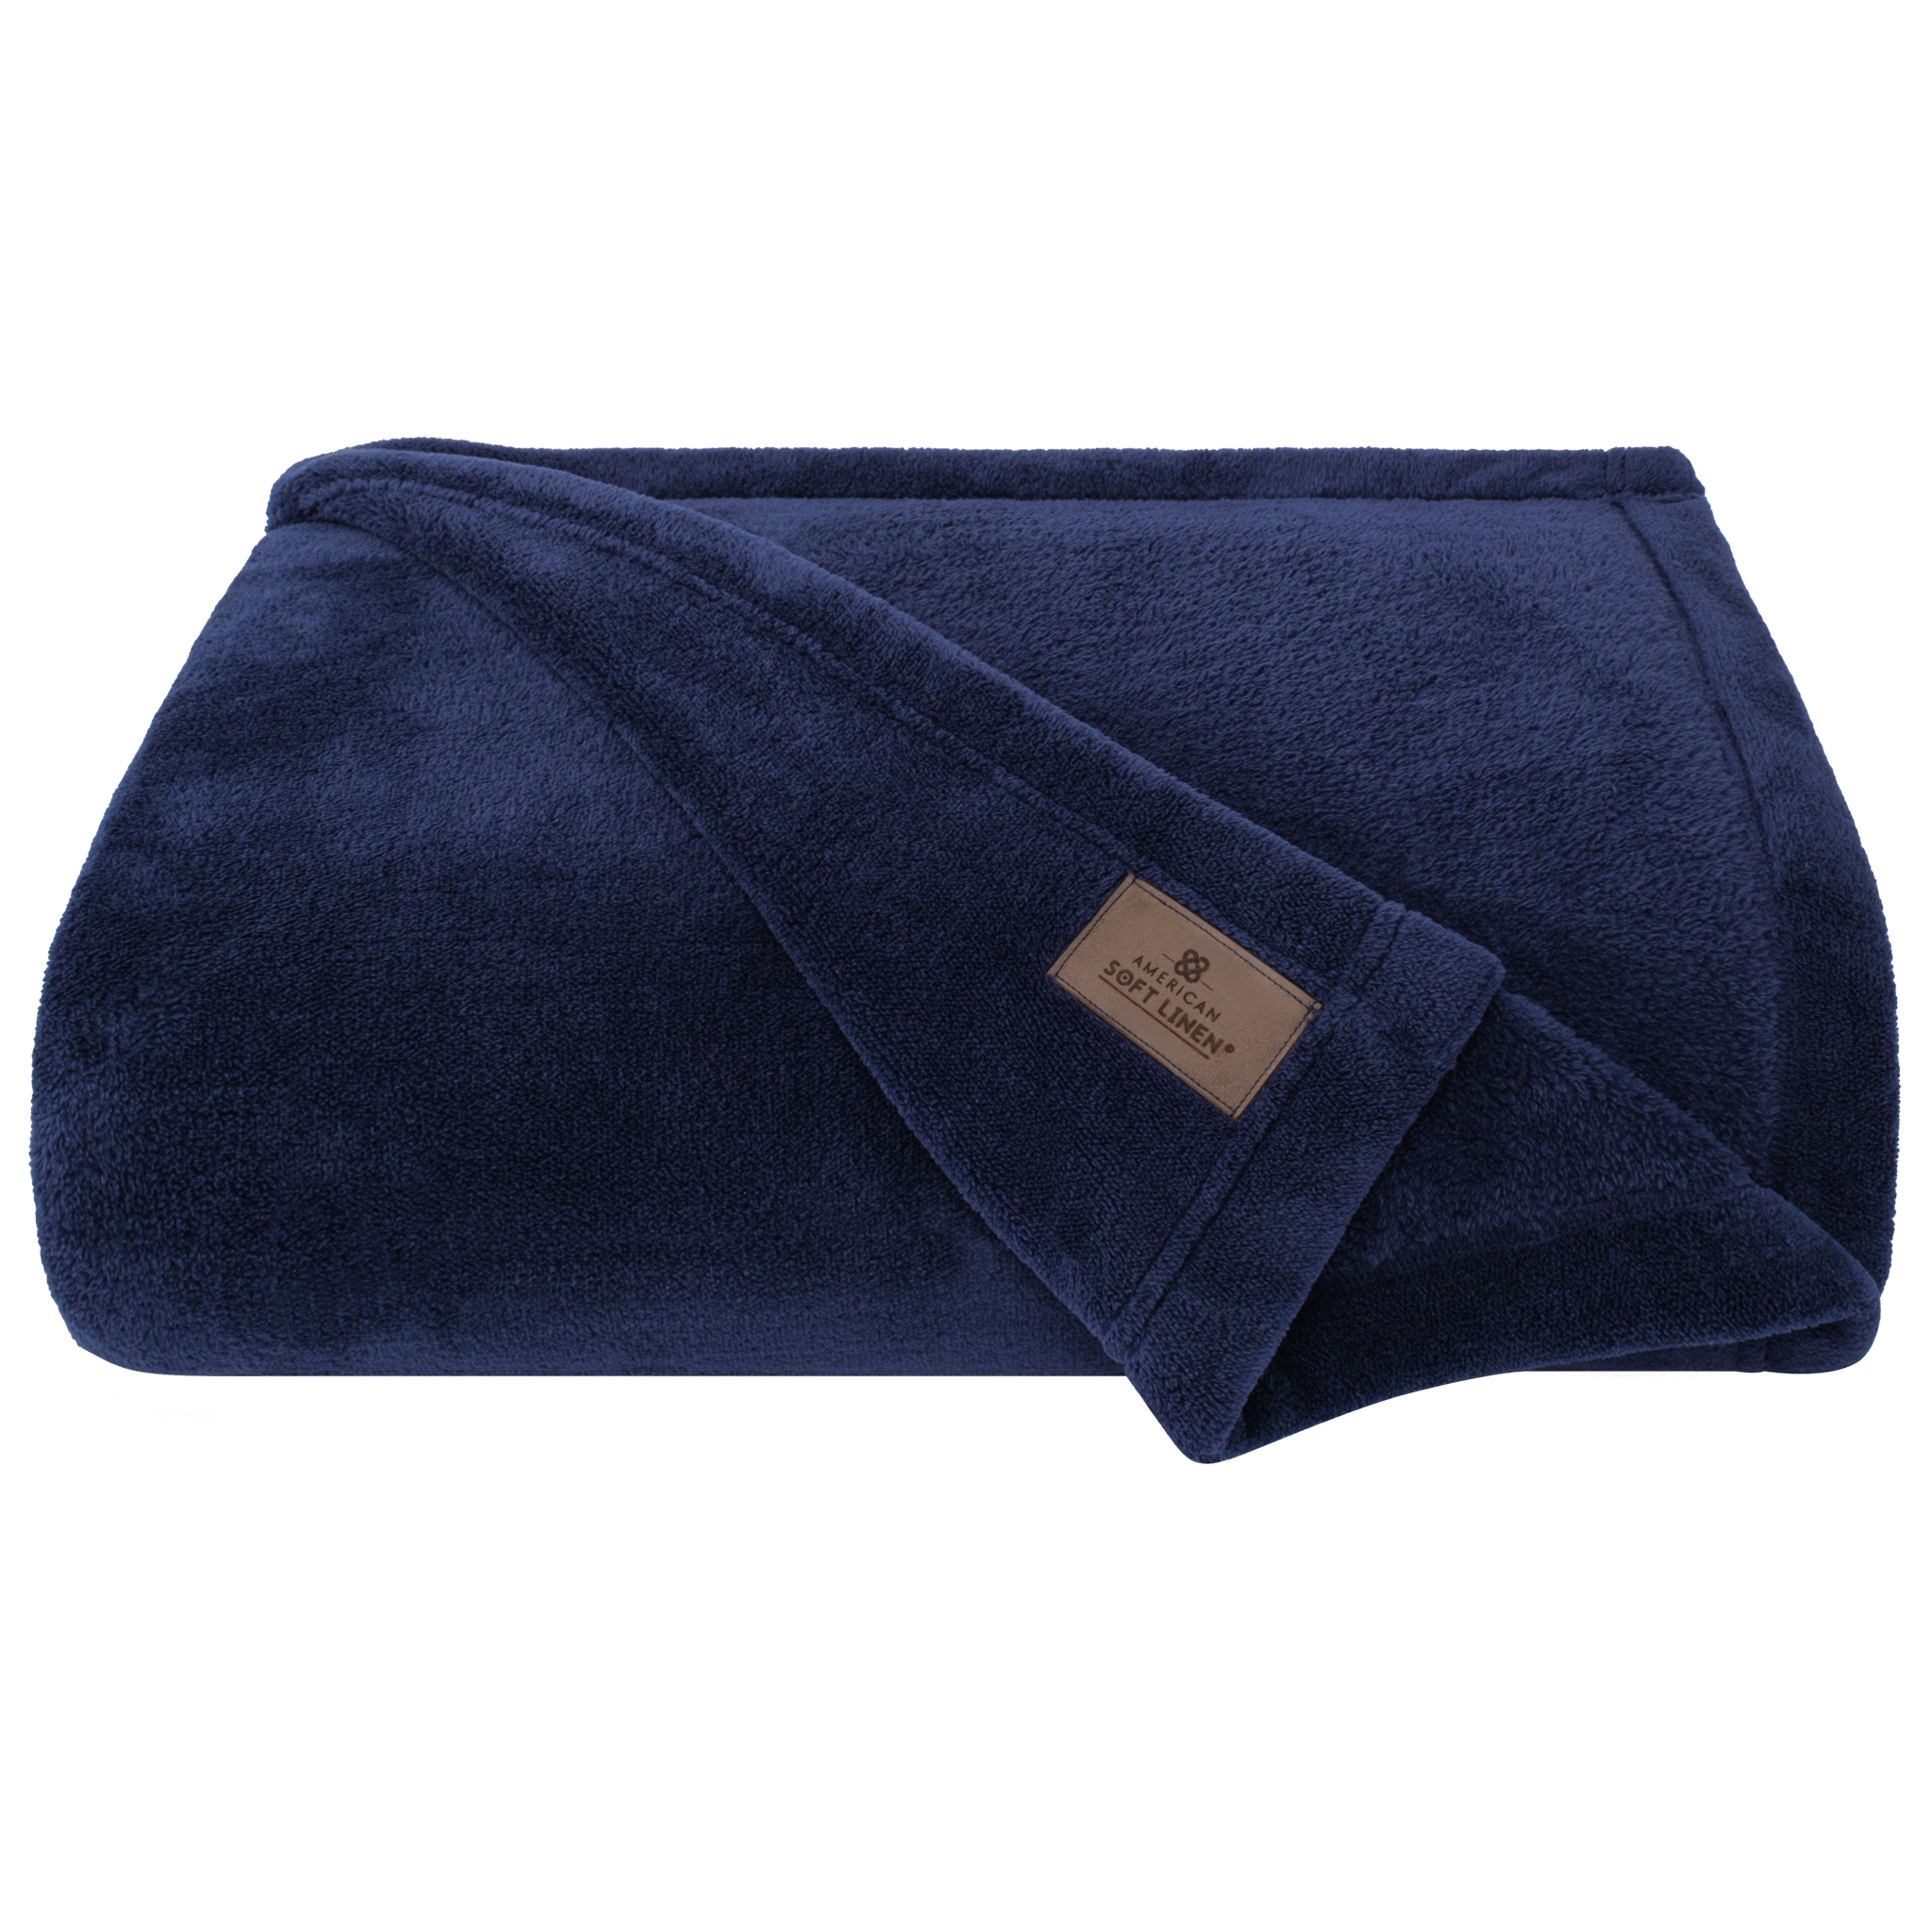 American Soft Linen - Bedding Fleece Blanket - Wholesale - 9 Set Case Pack - Queen Size 85x90 inches - Navy-Blue - 3